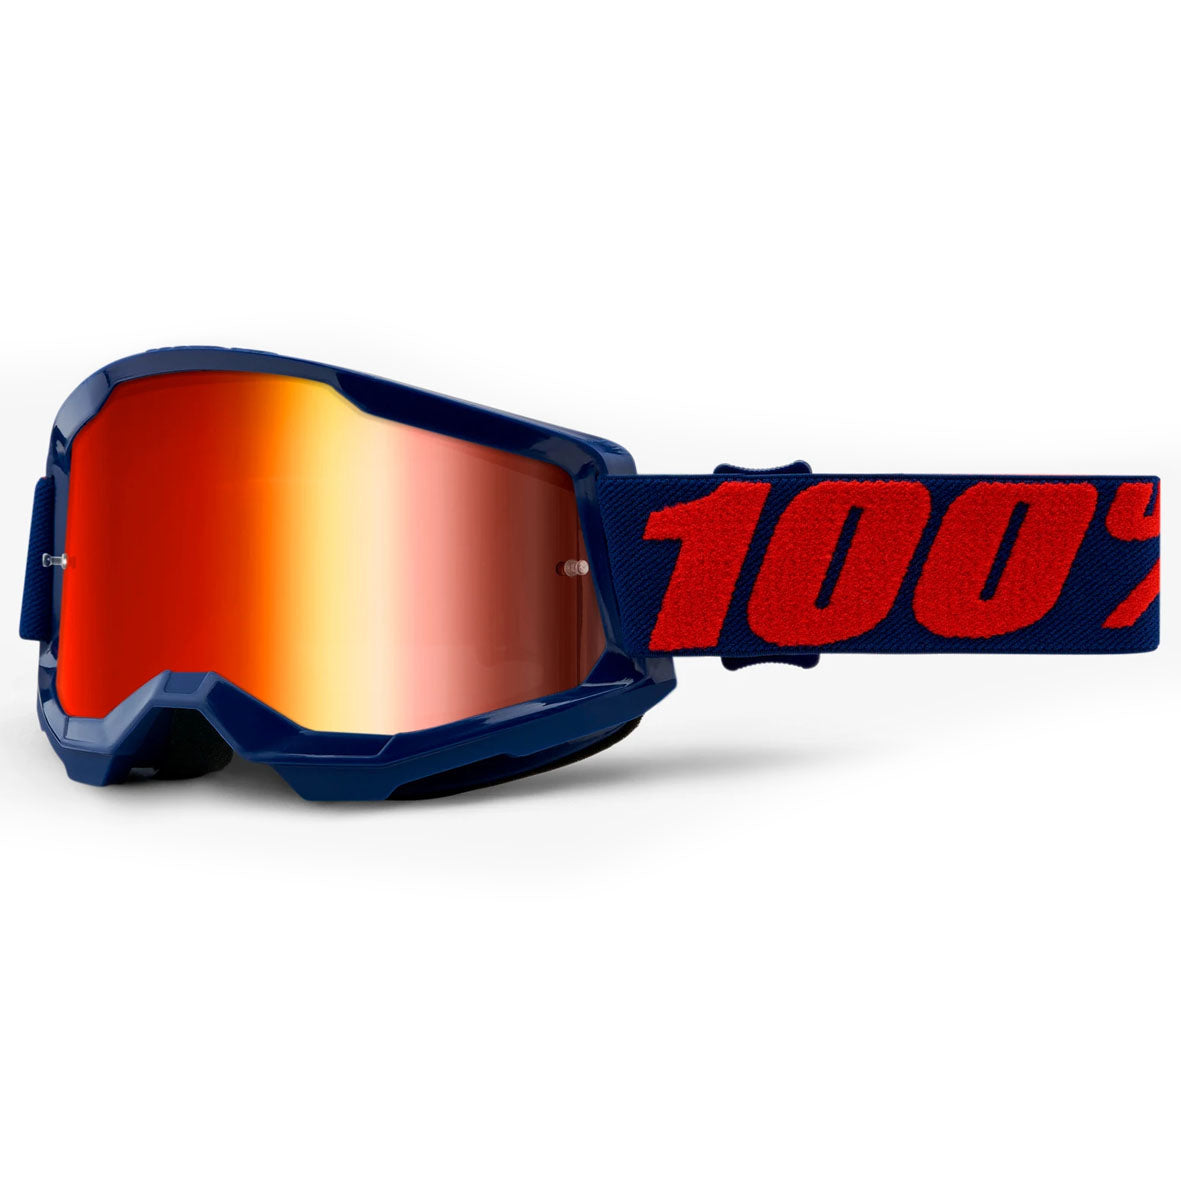 100% Strata 2 Goggles - Masego (Mirror Red Lens)